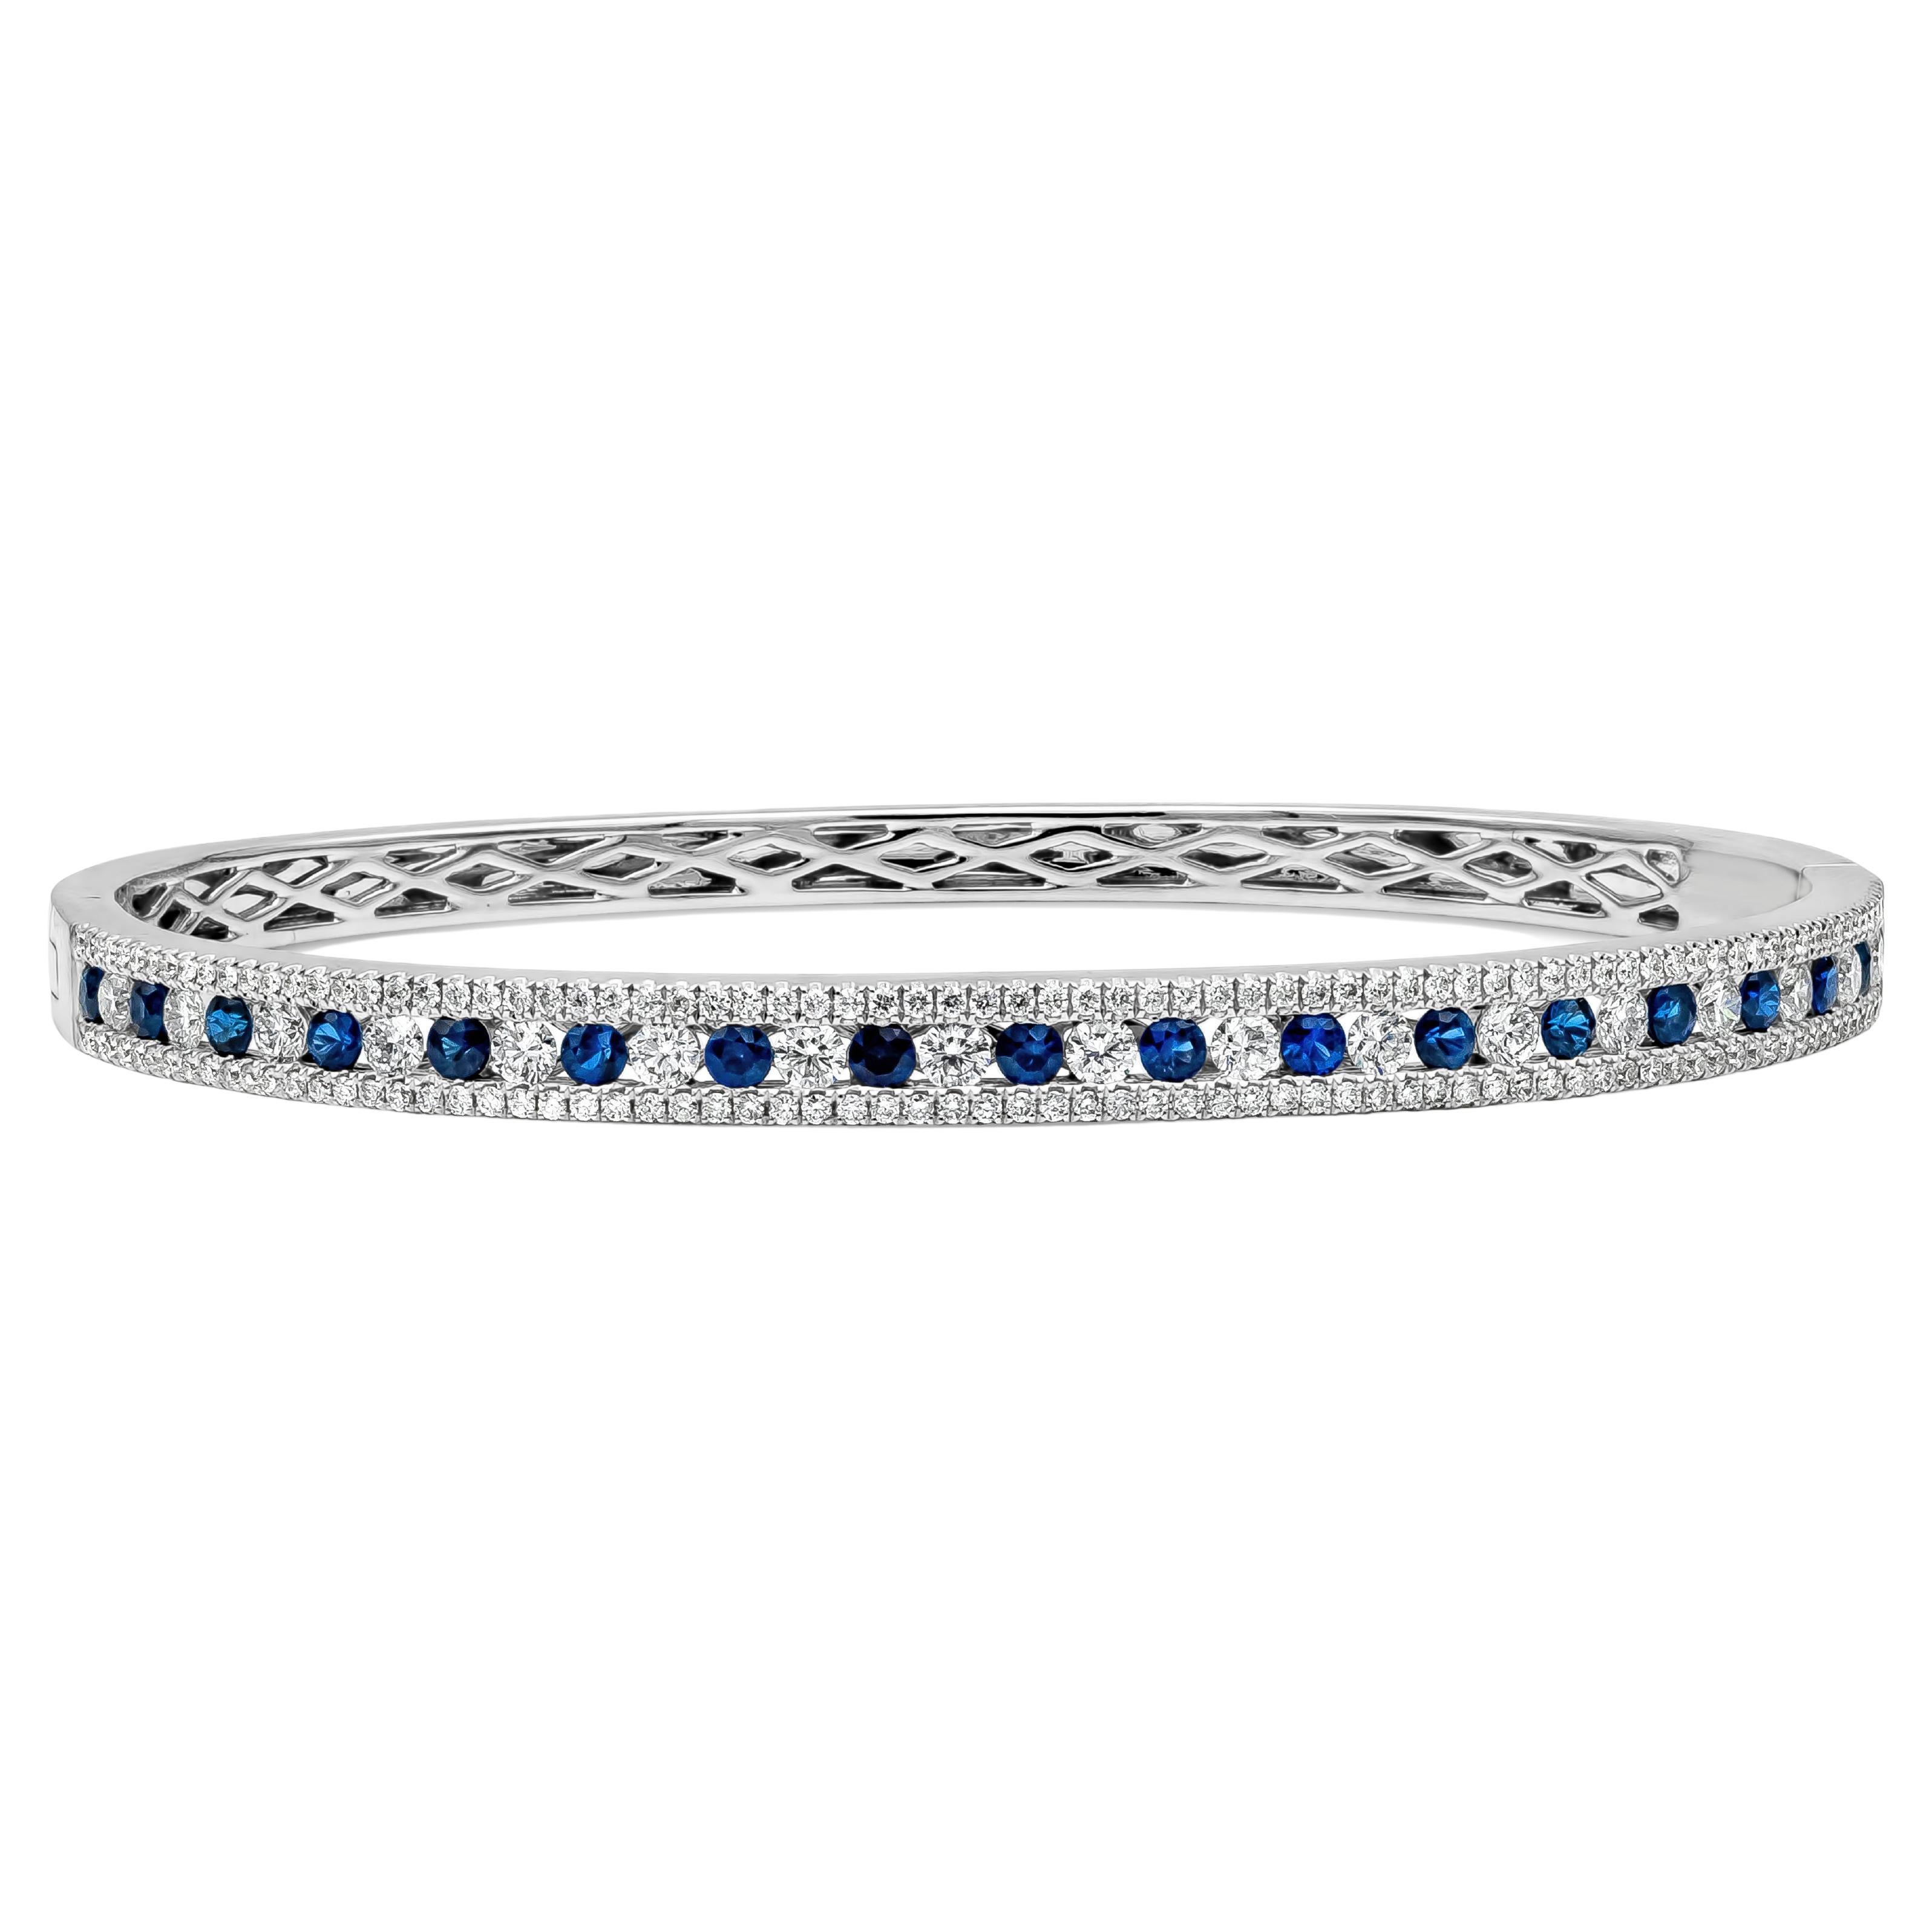 Roman Malakov 2.63 Carats Alternating Blue Sapphire and Diamond Bangle Bracelet